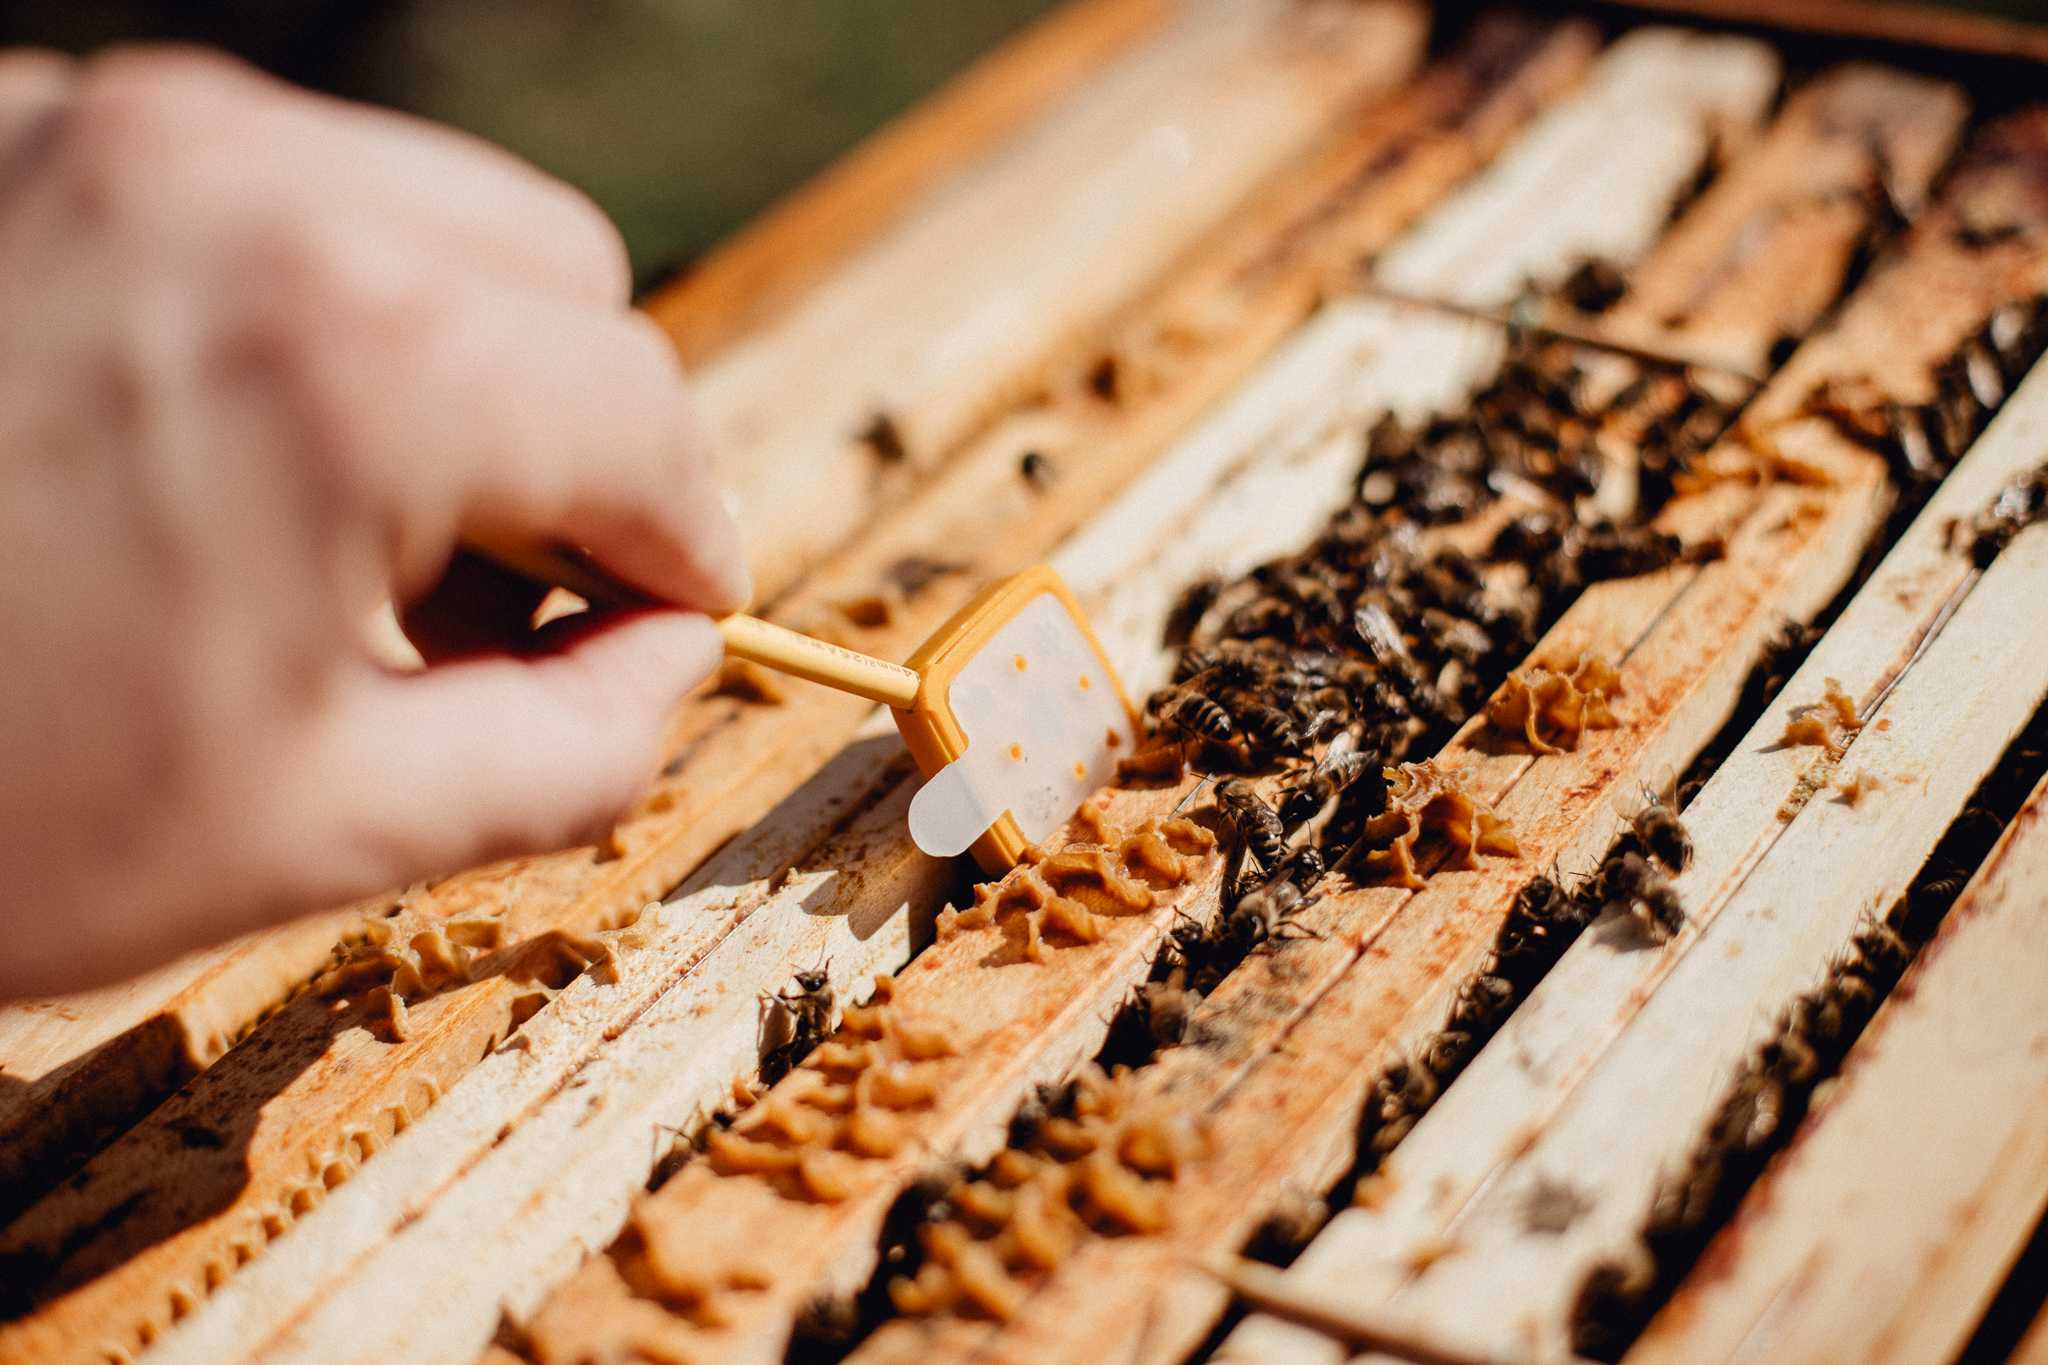 3Bee Beekeeper with sensor and bees in honey bee hive